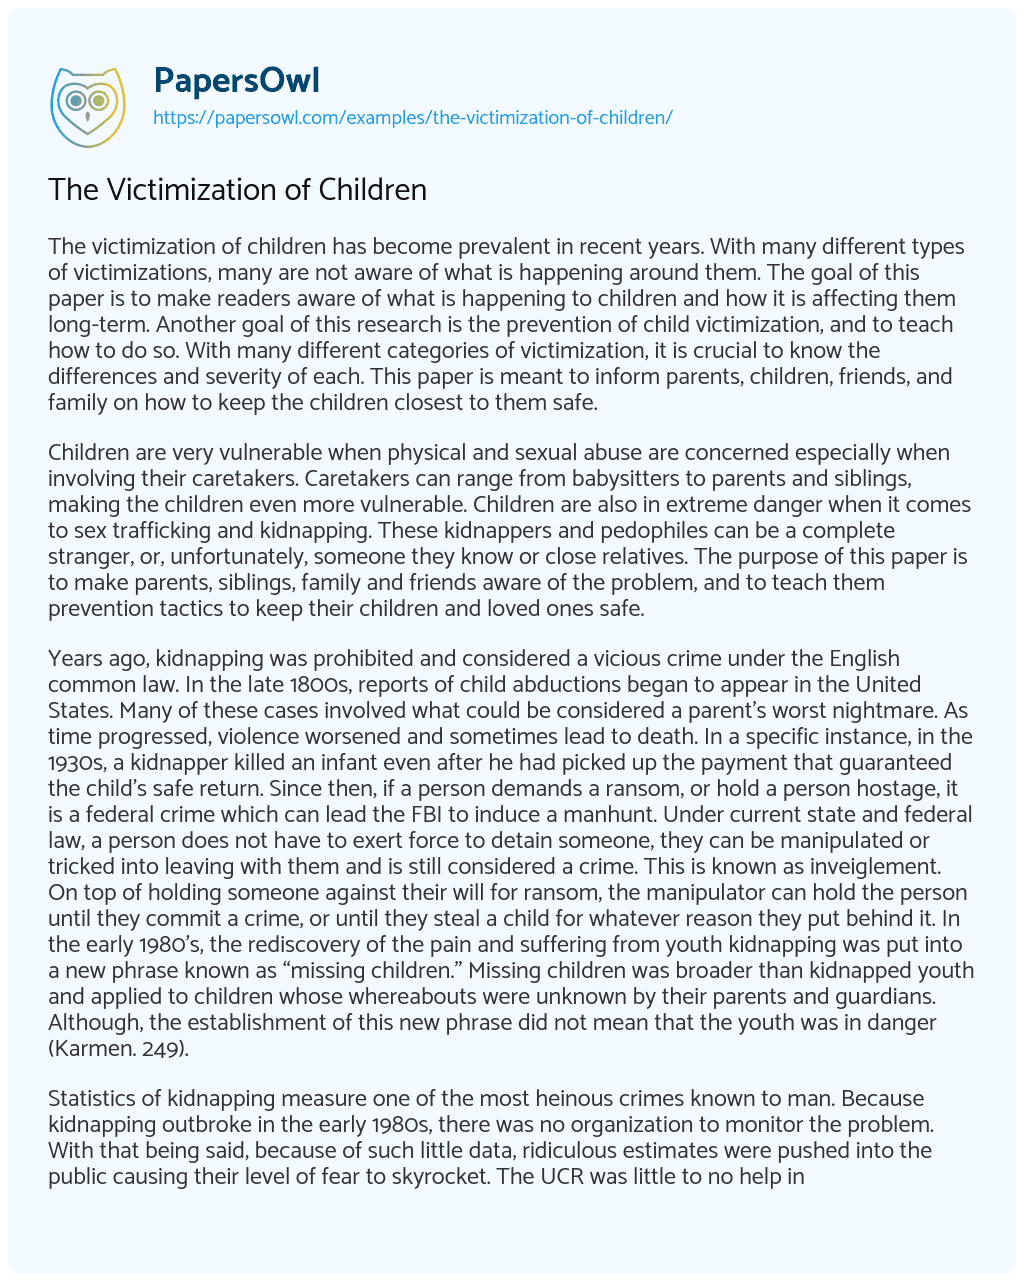 Essay on The Victimization of Children